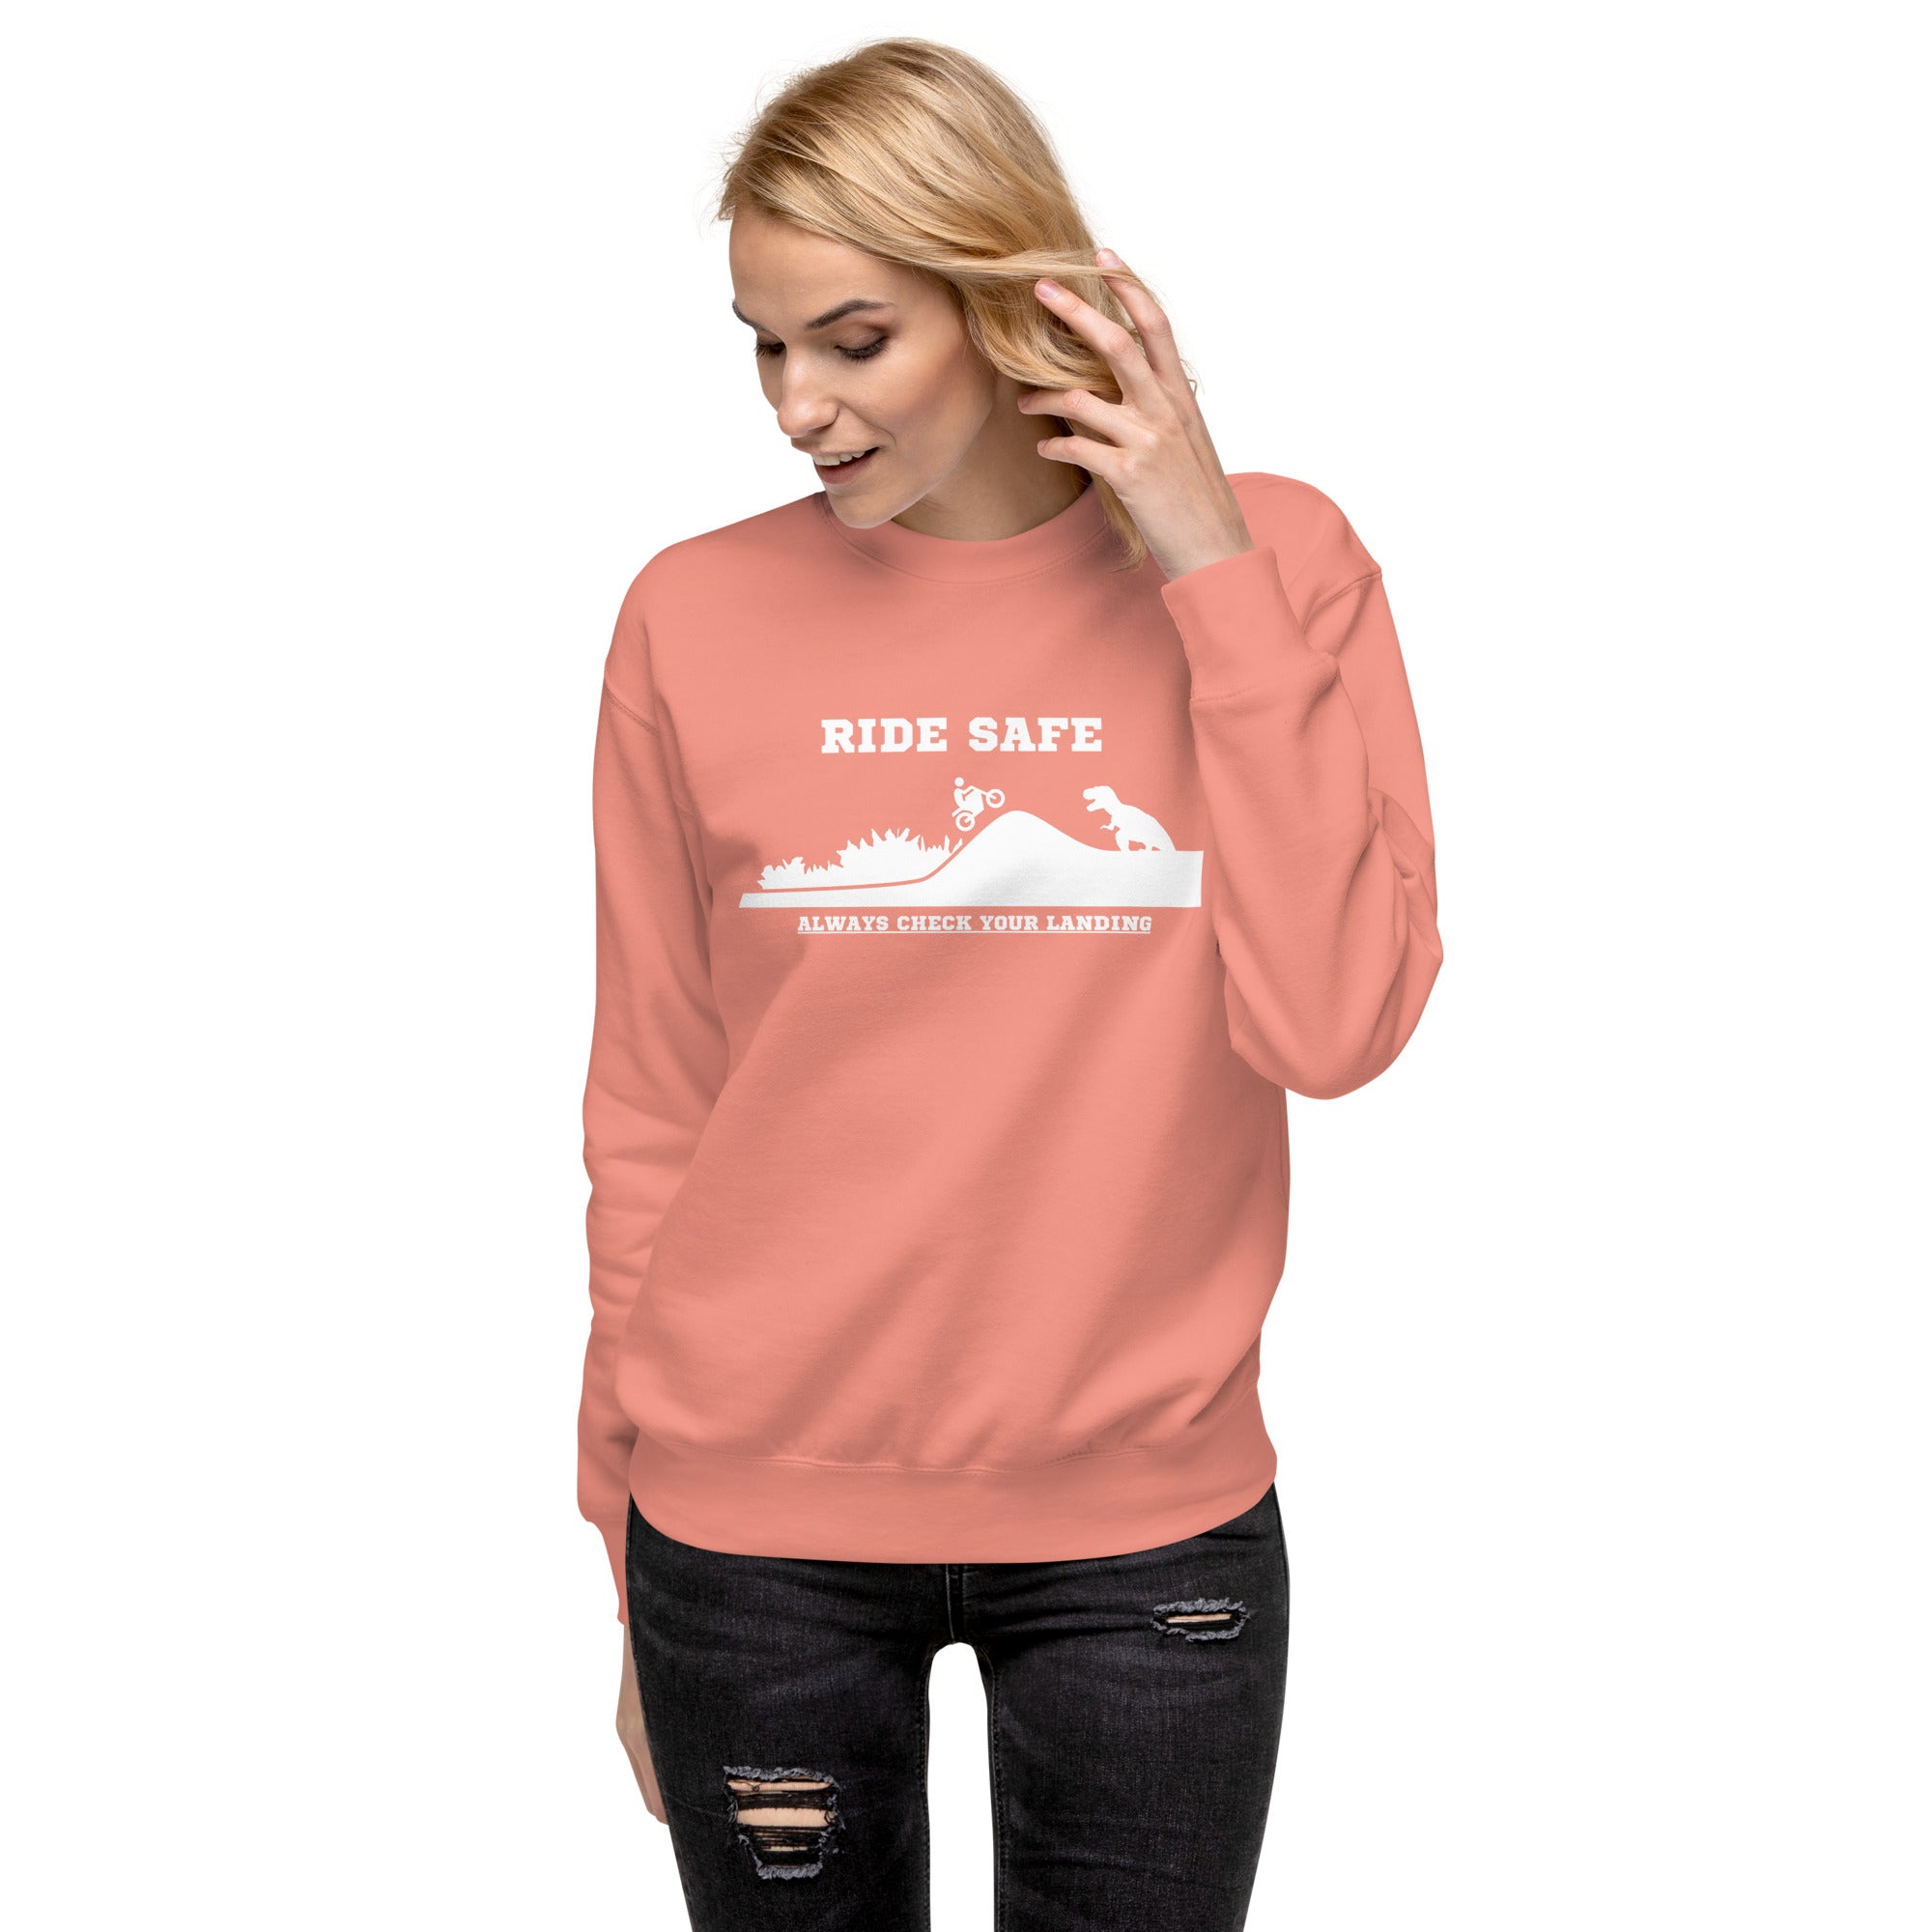 Ride Safe Check Your Landing Women's Premium Sweatshirt